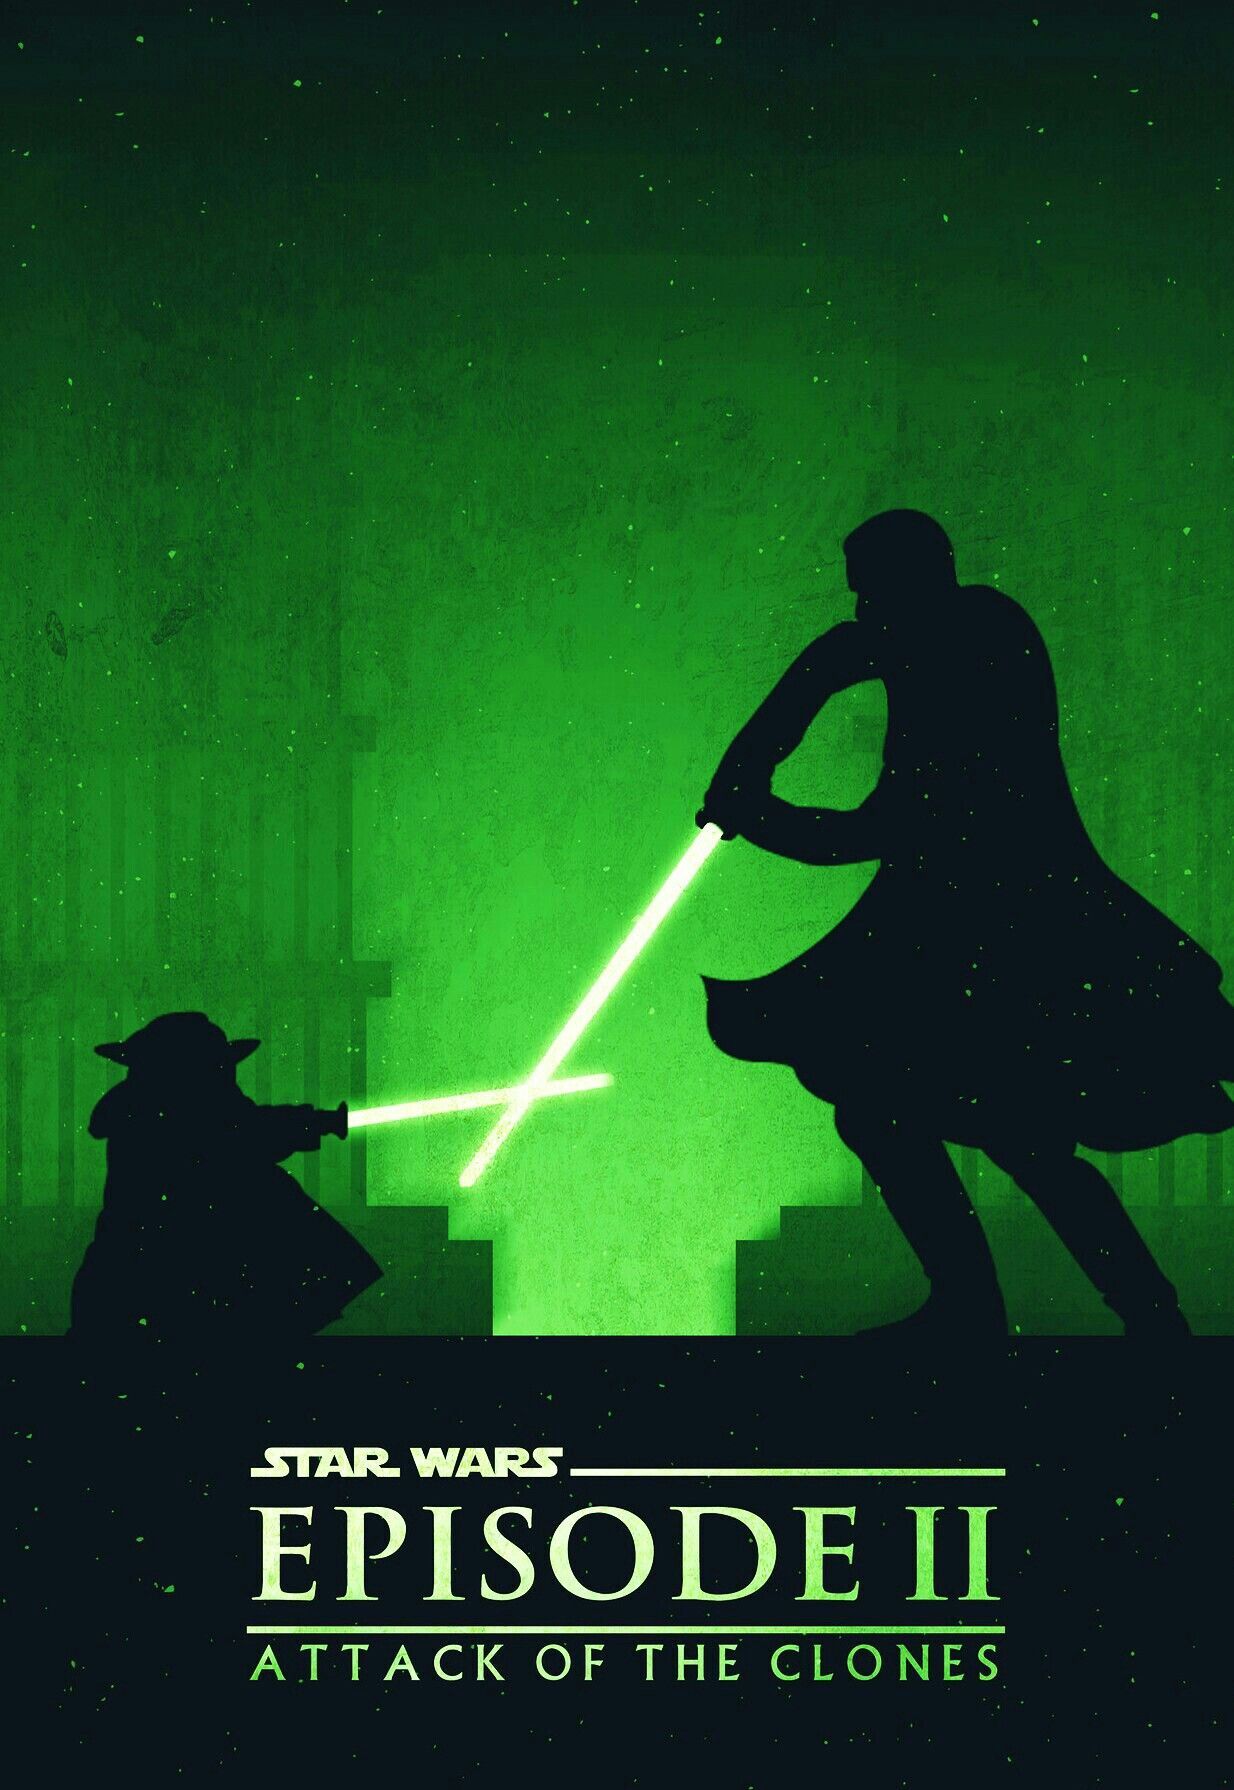 ATTACK OF THE CLONES. Star wars illustration, Star wars poster, Star wars love